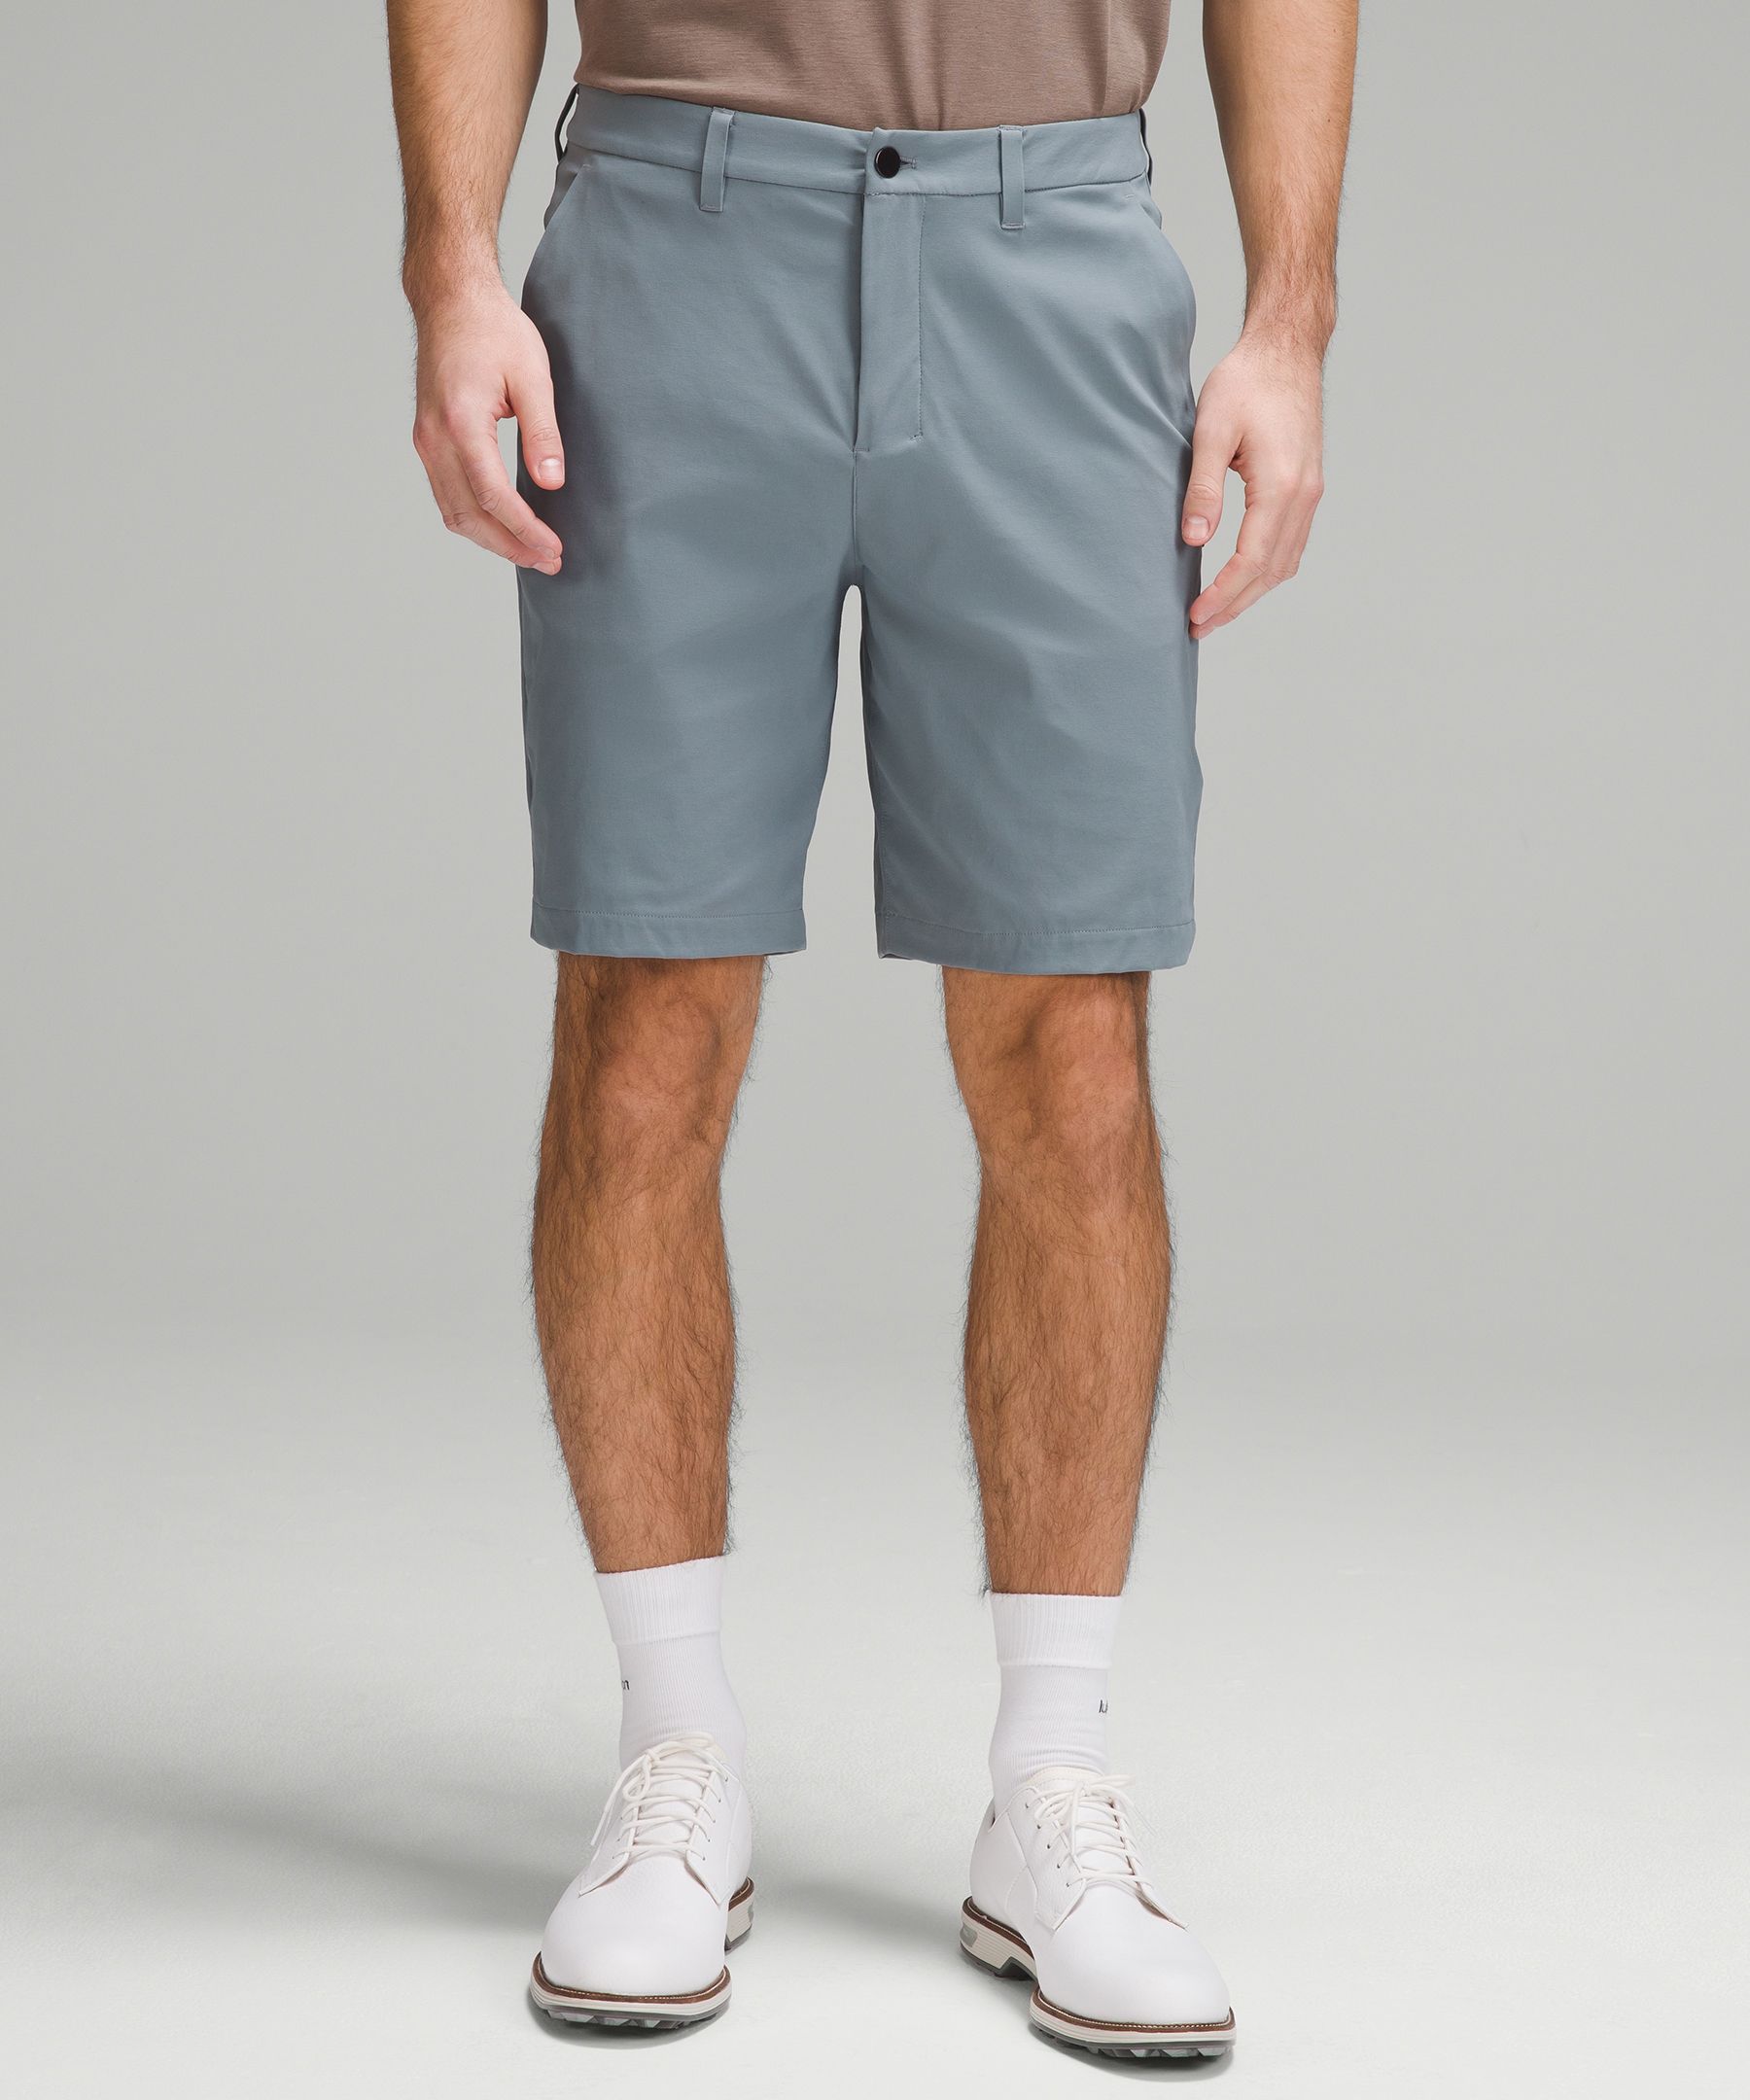 Men's Shorts, Classic Fit Chino Shorts